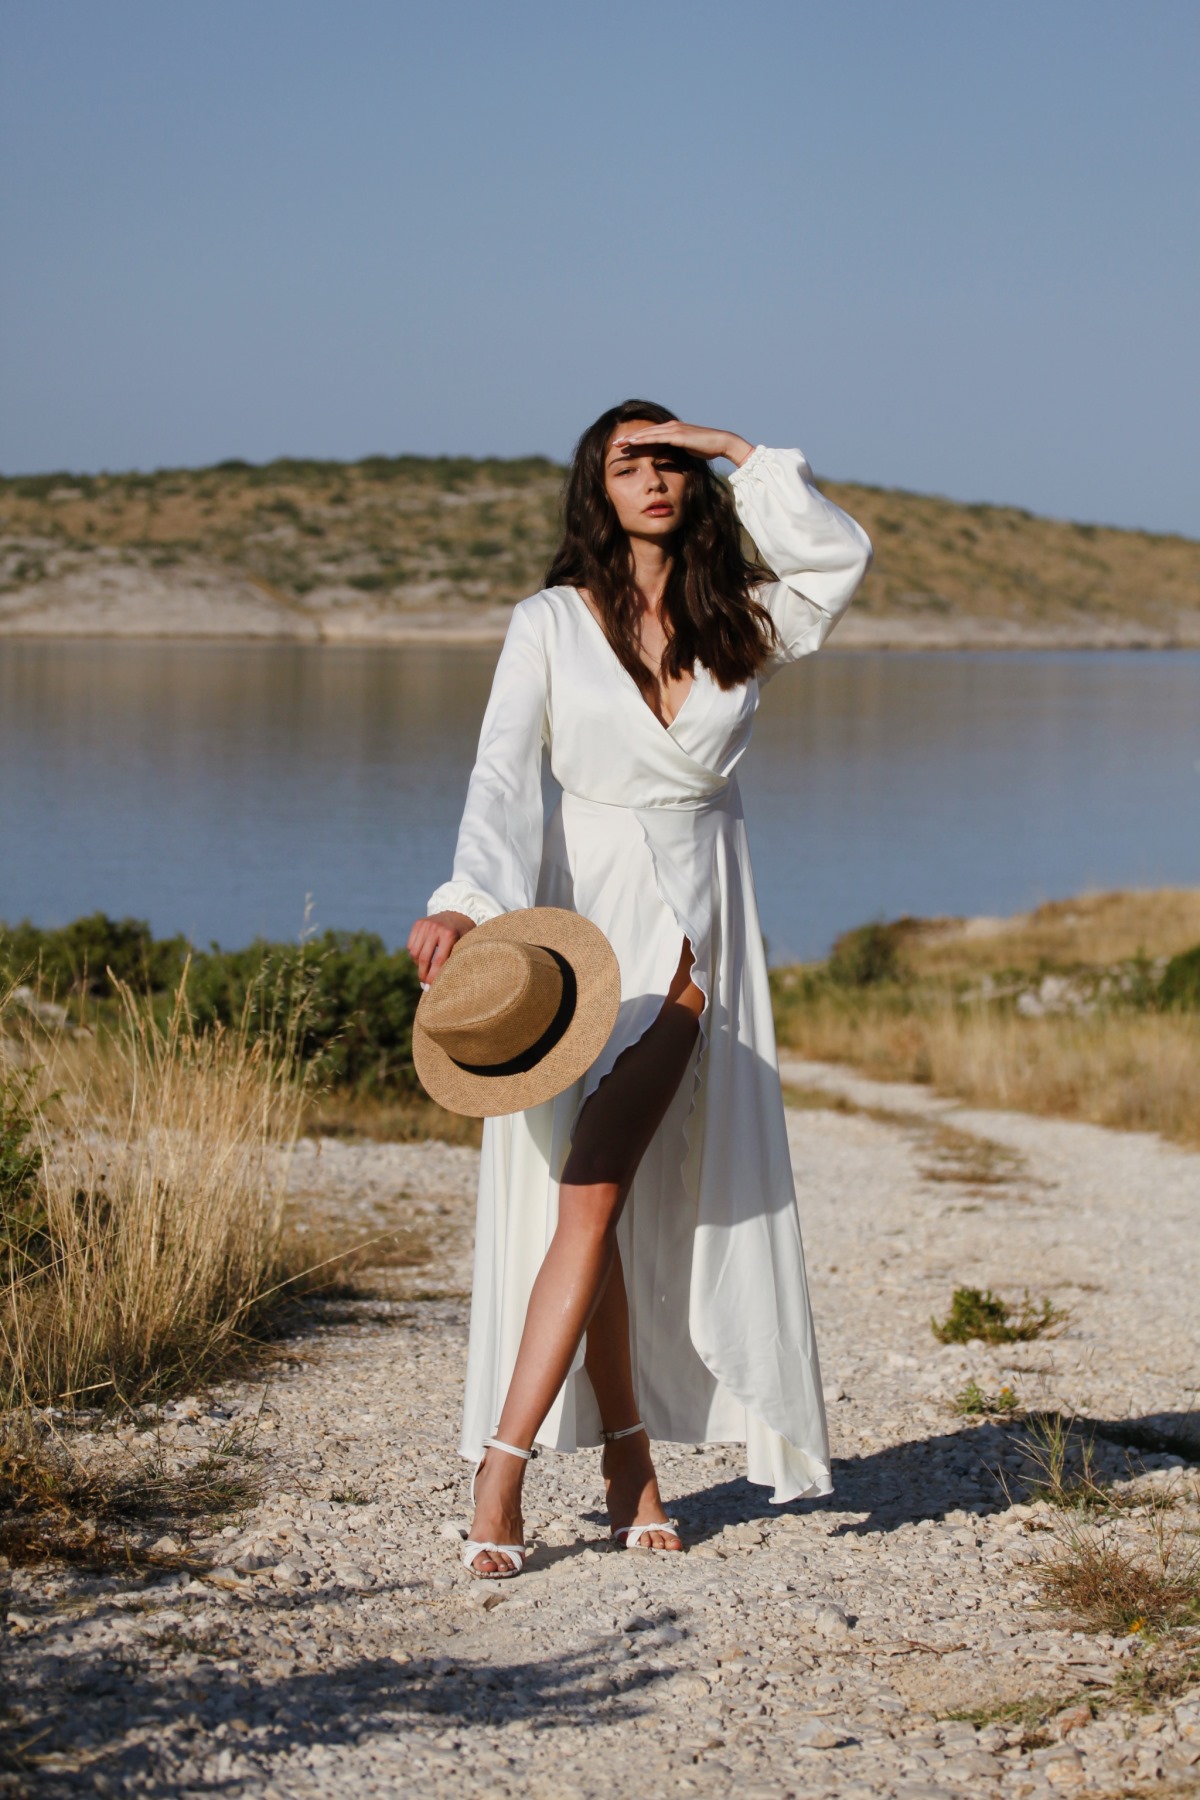 Nova kolekcija zadarske dizajnerice Božene Bratović nosi naziv "Lady in white"